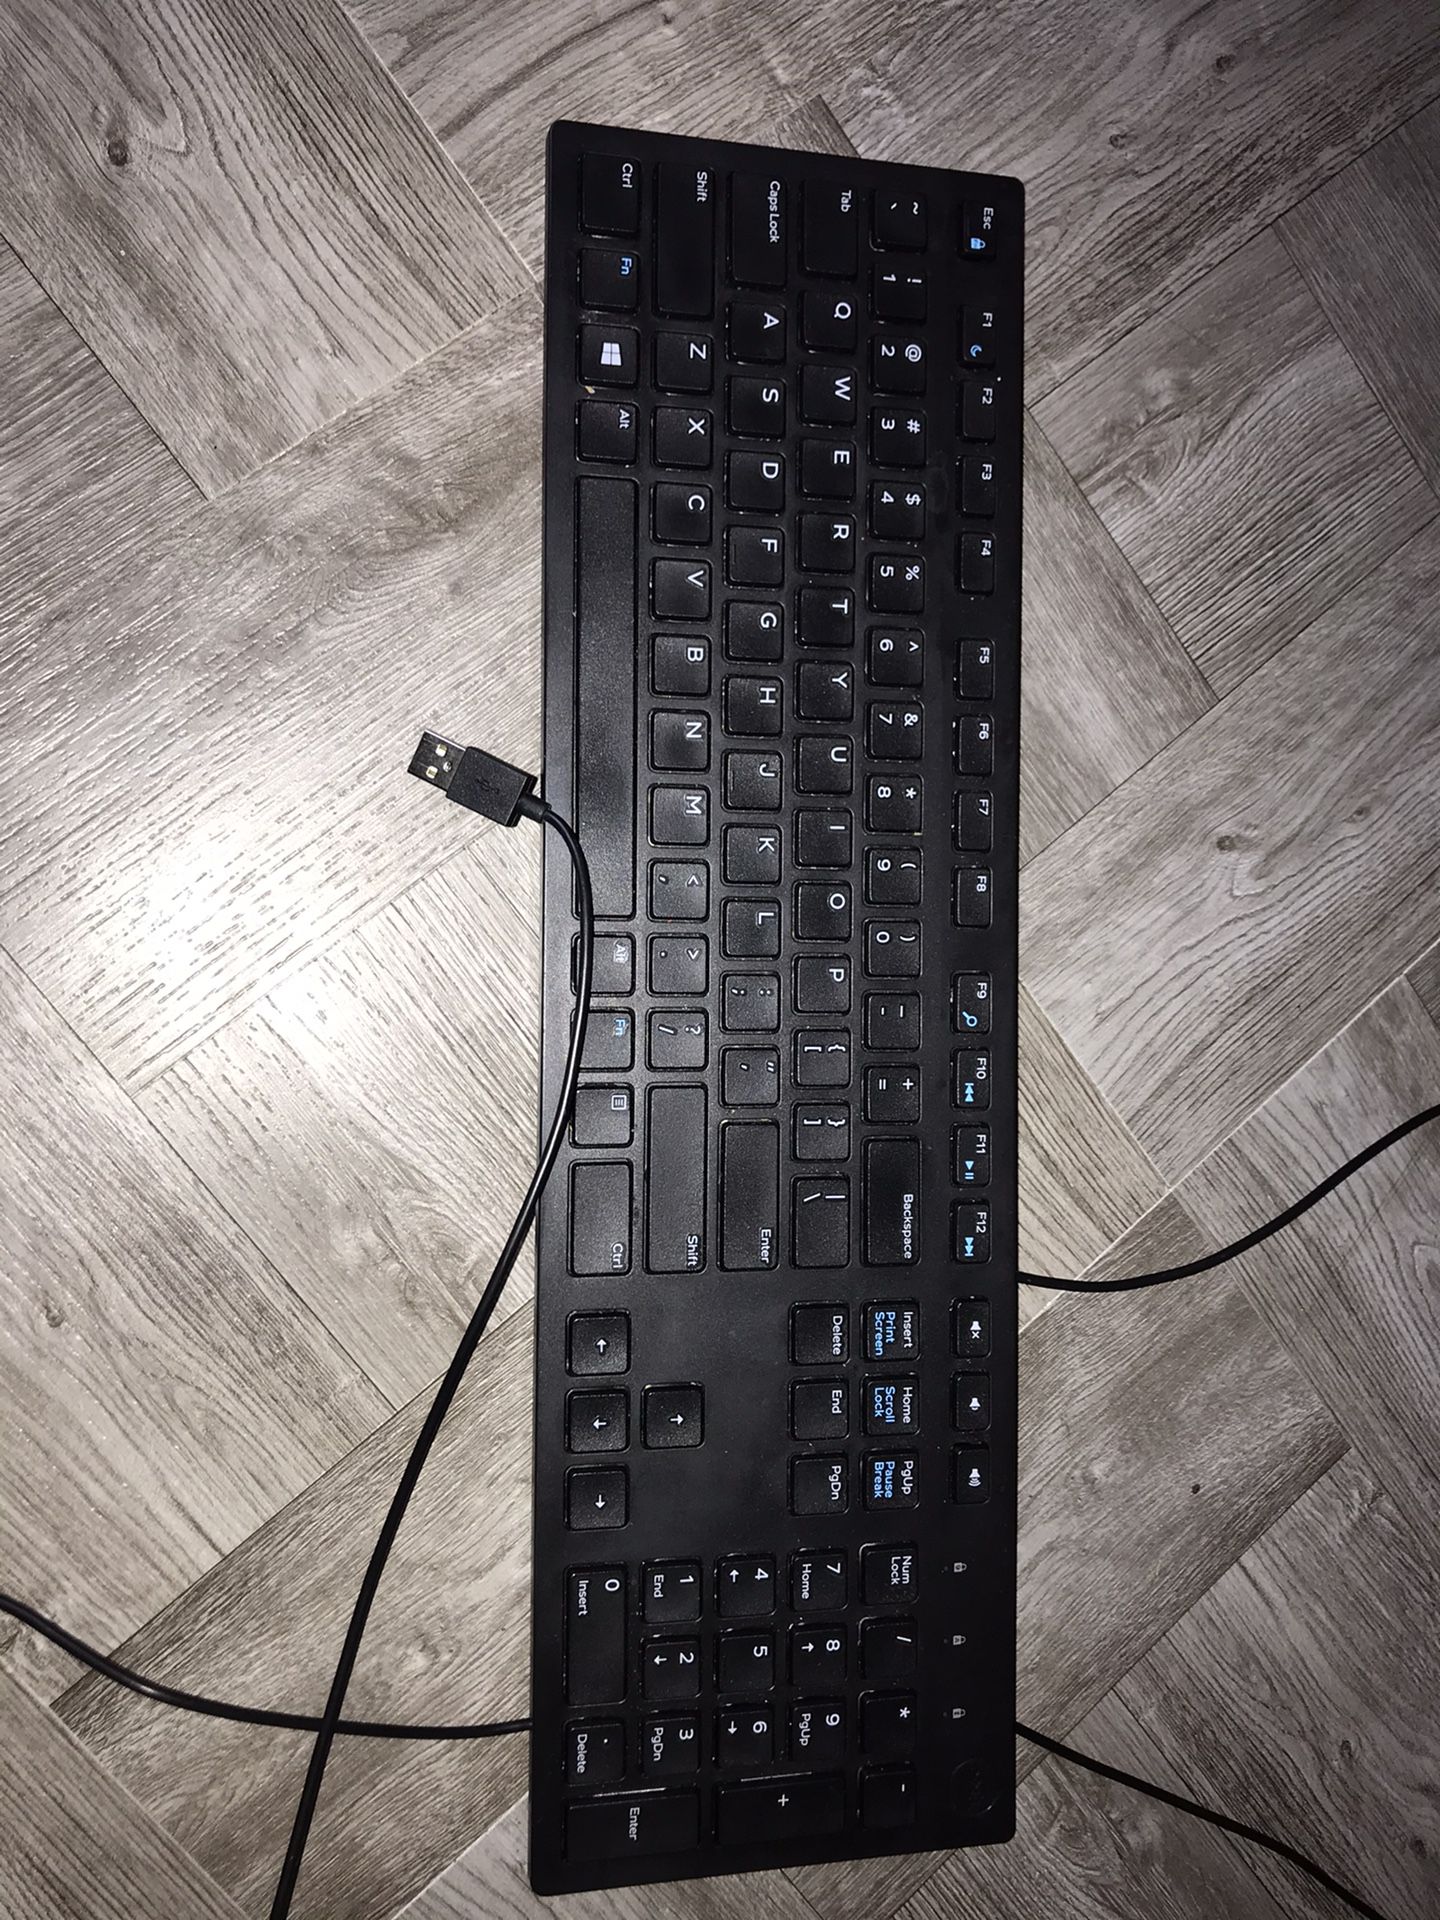 Wired USB Keyboard